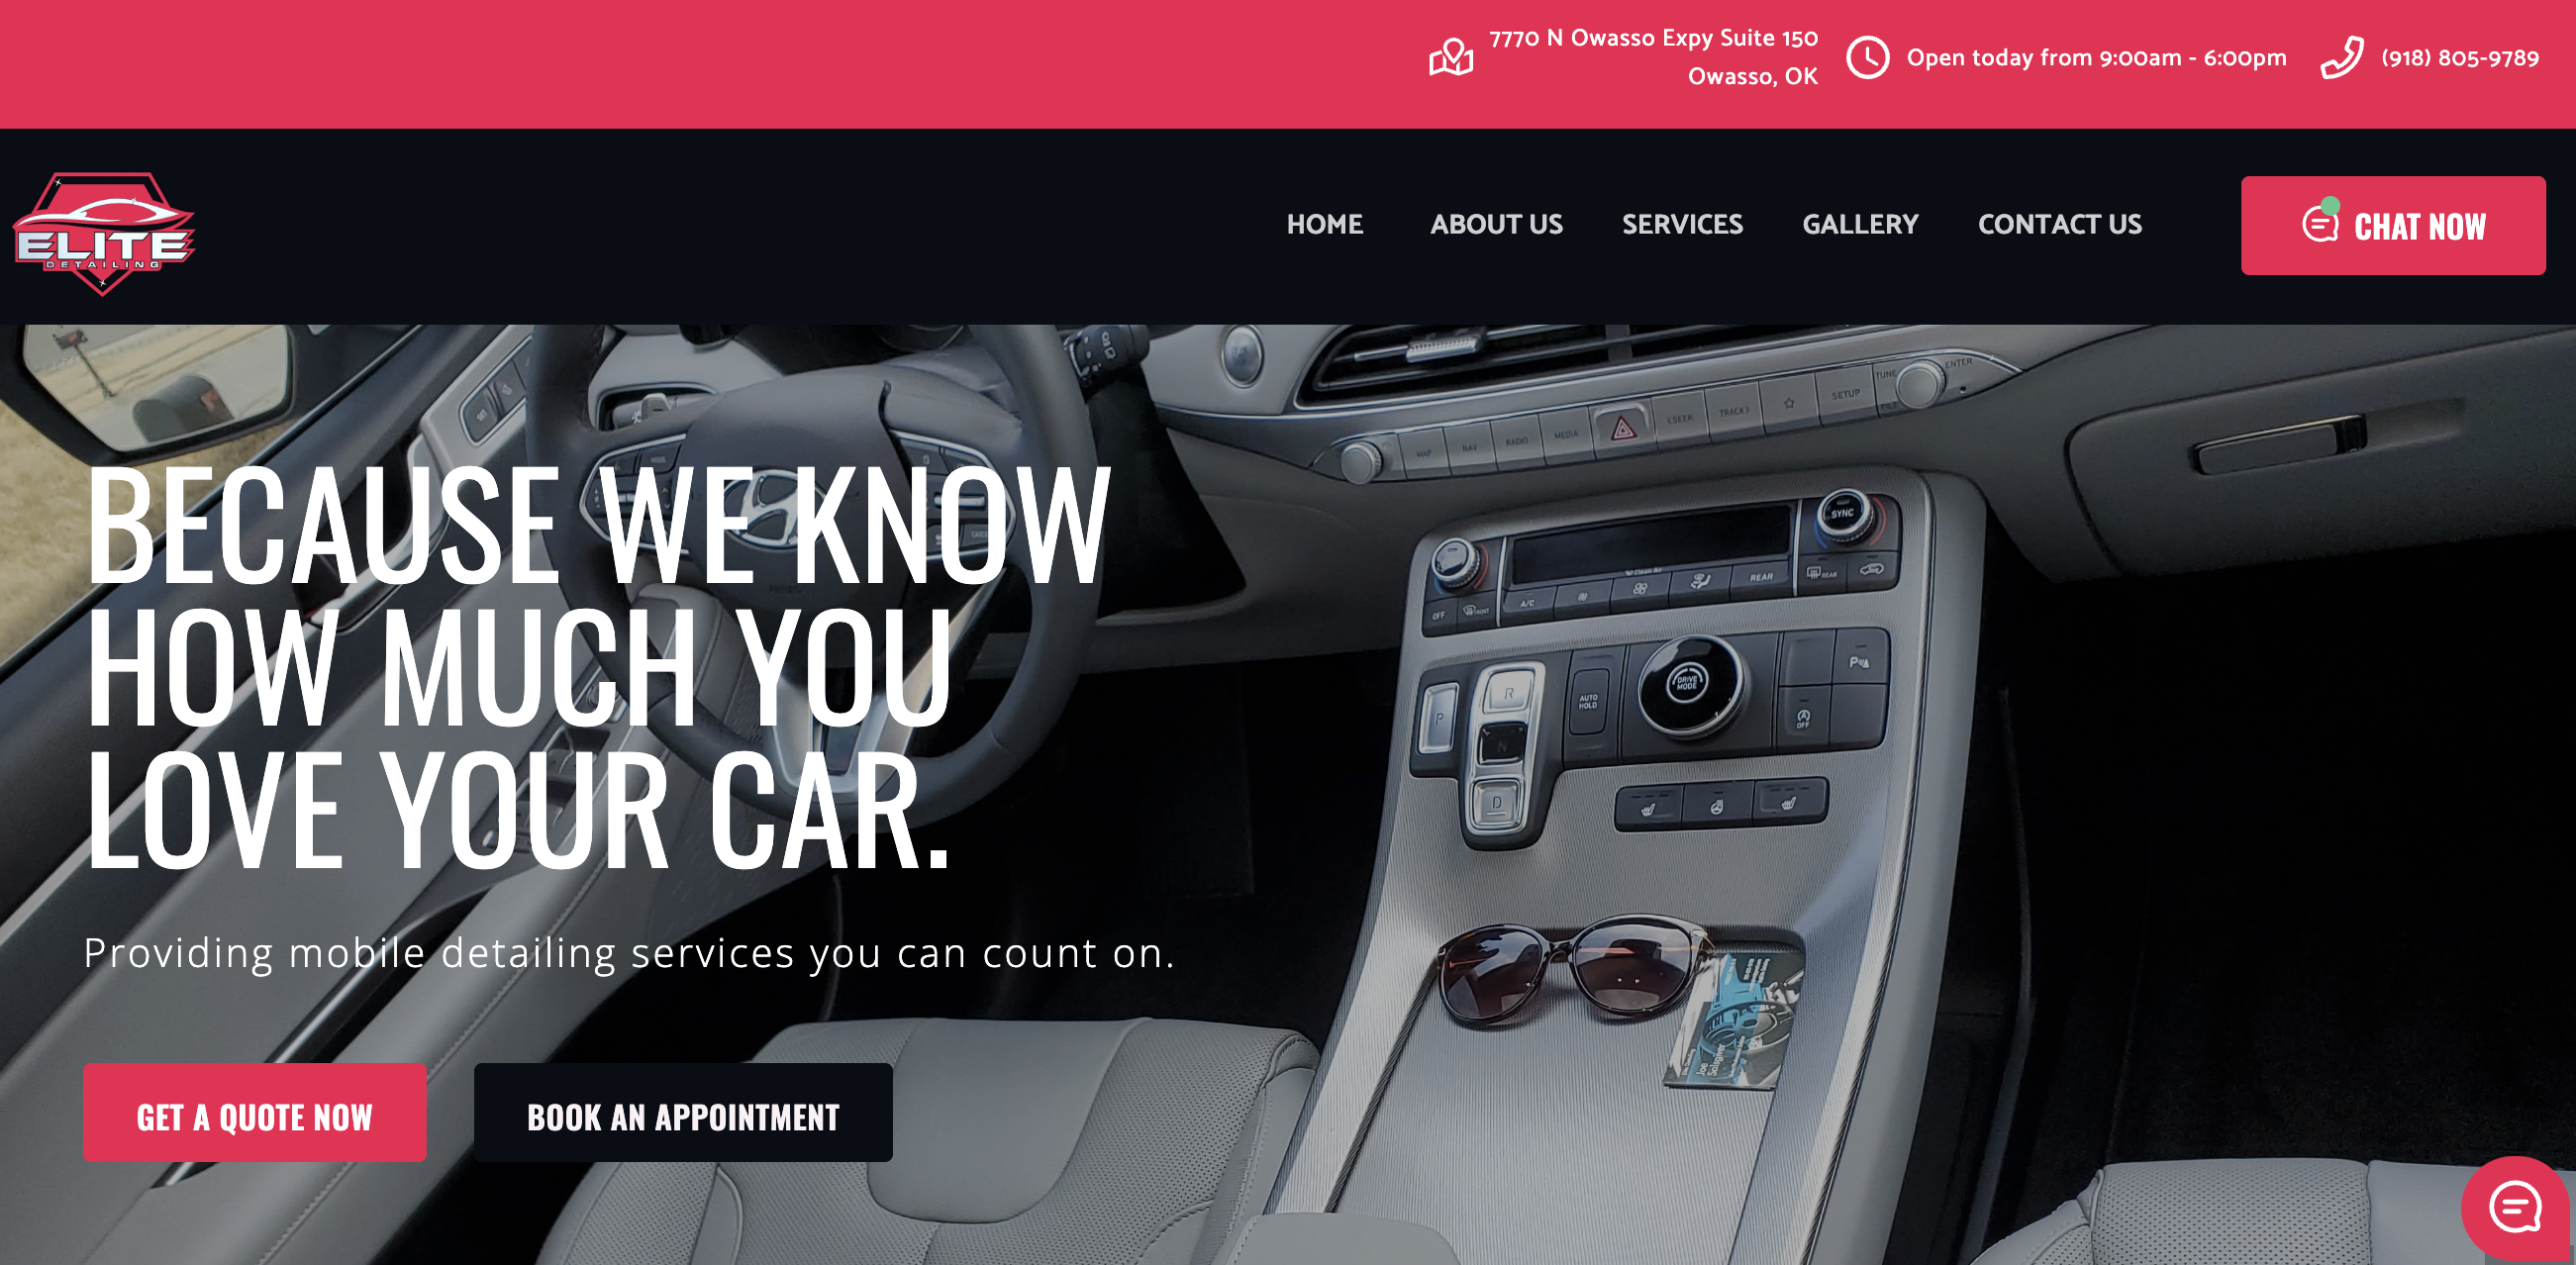 elite detaling gosite website customer best car mobile detailer websites